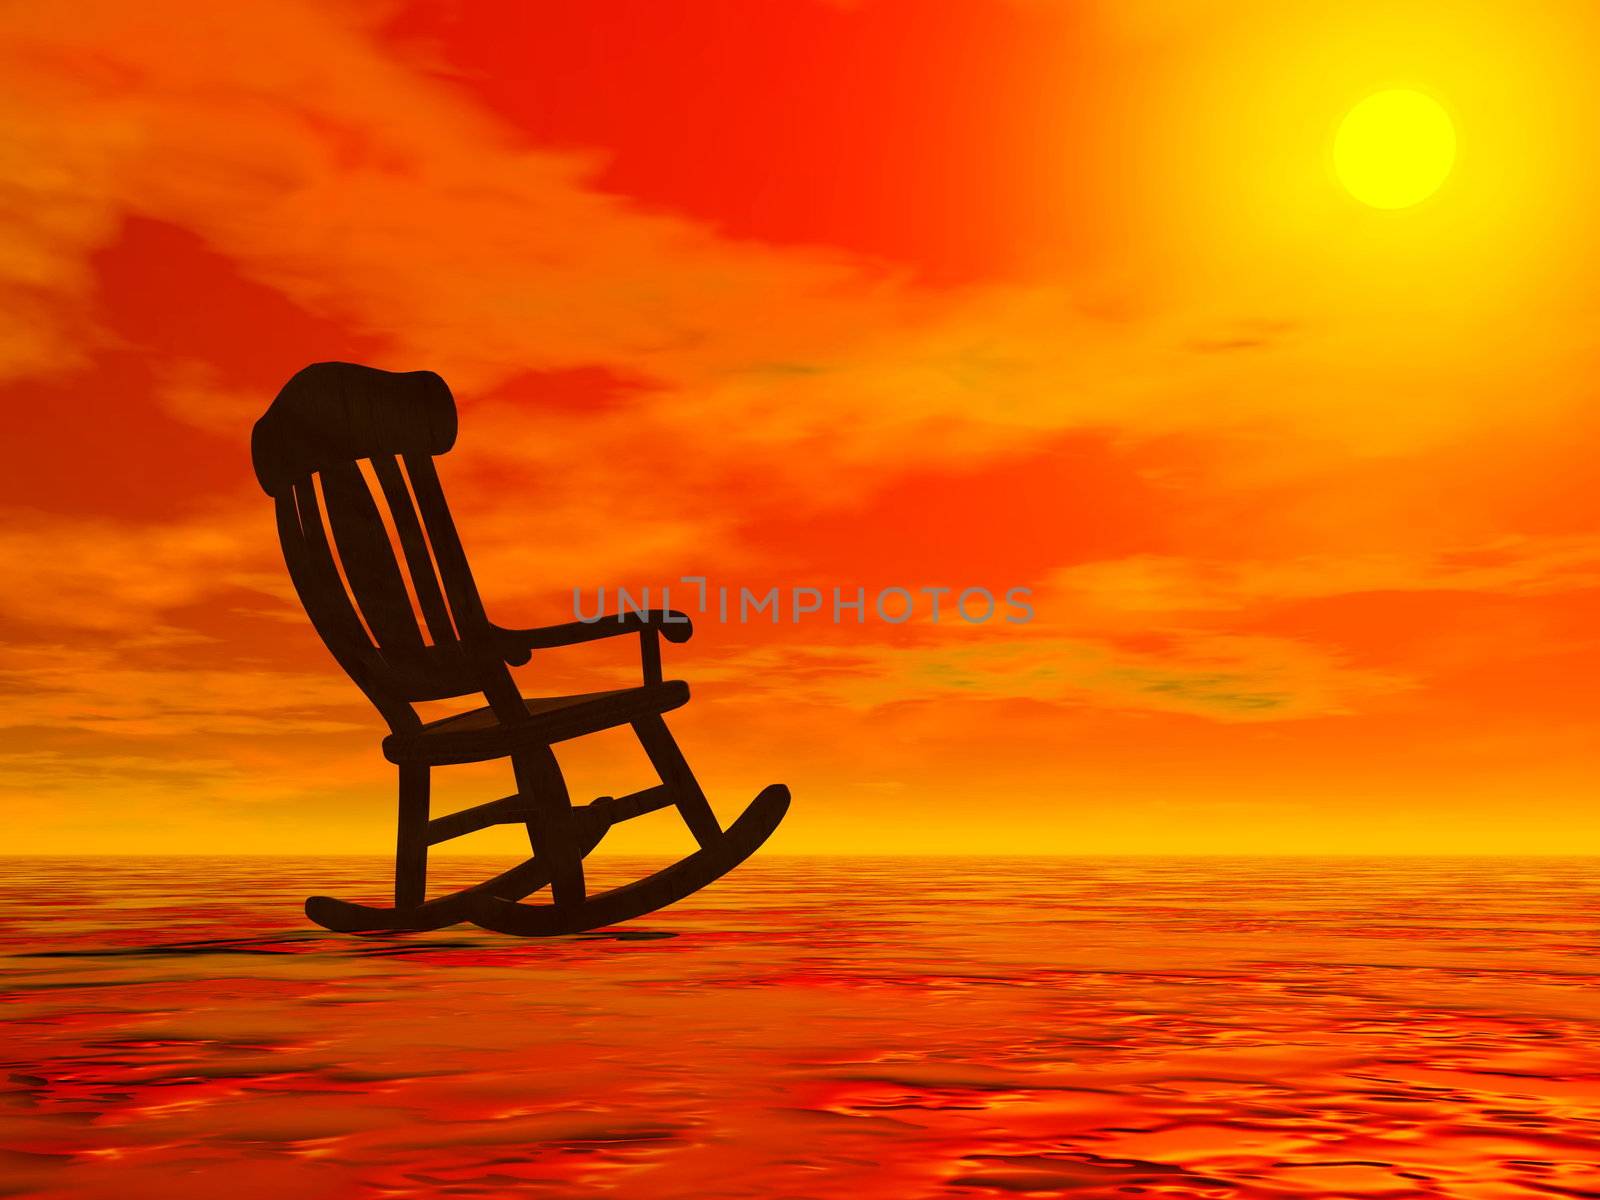 Rocking chair alone outside by beautiful sunset